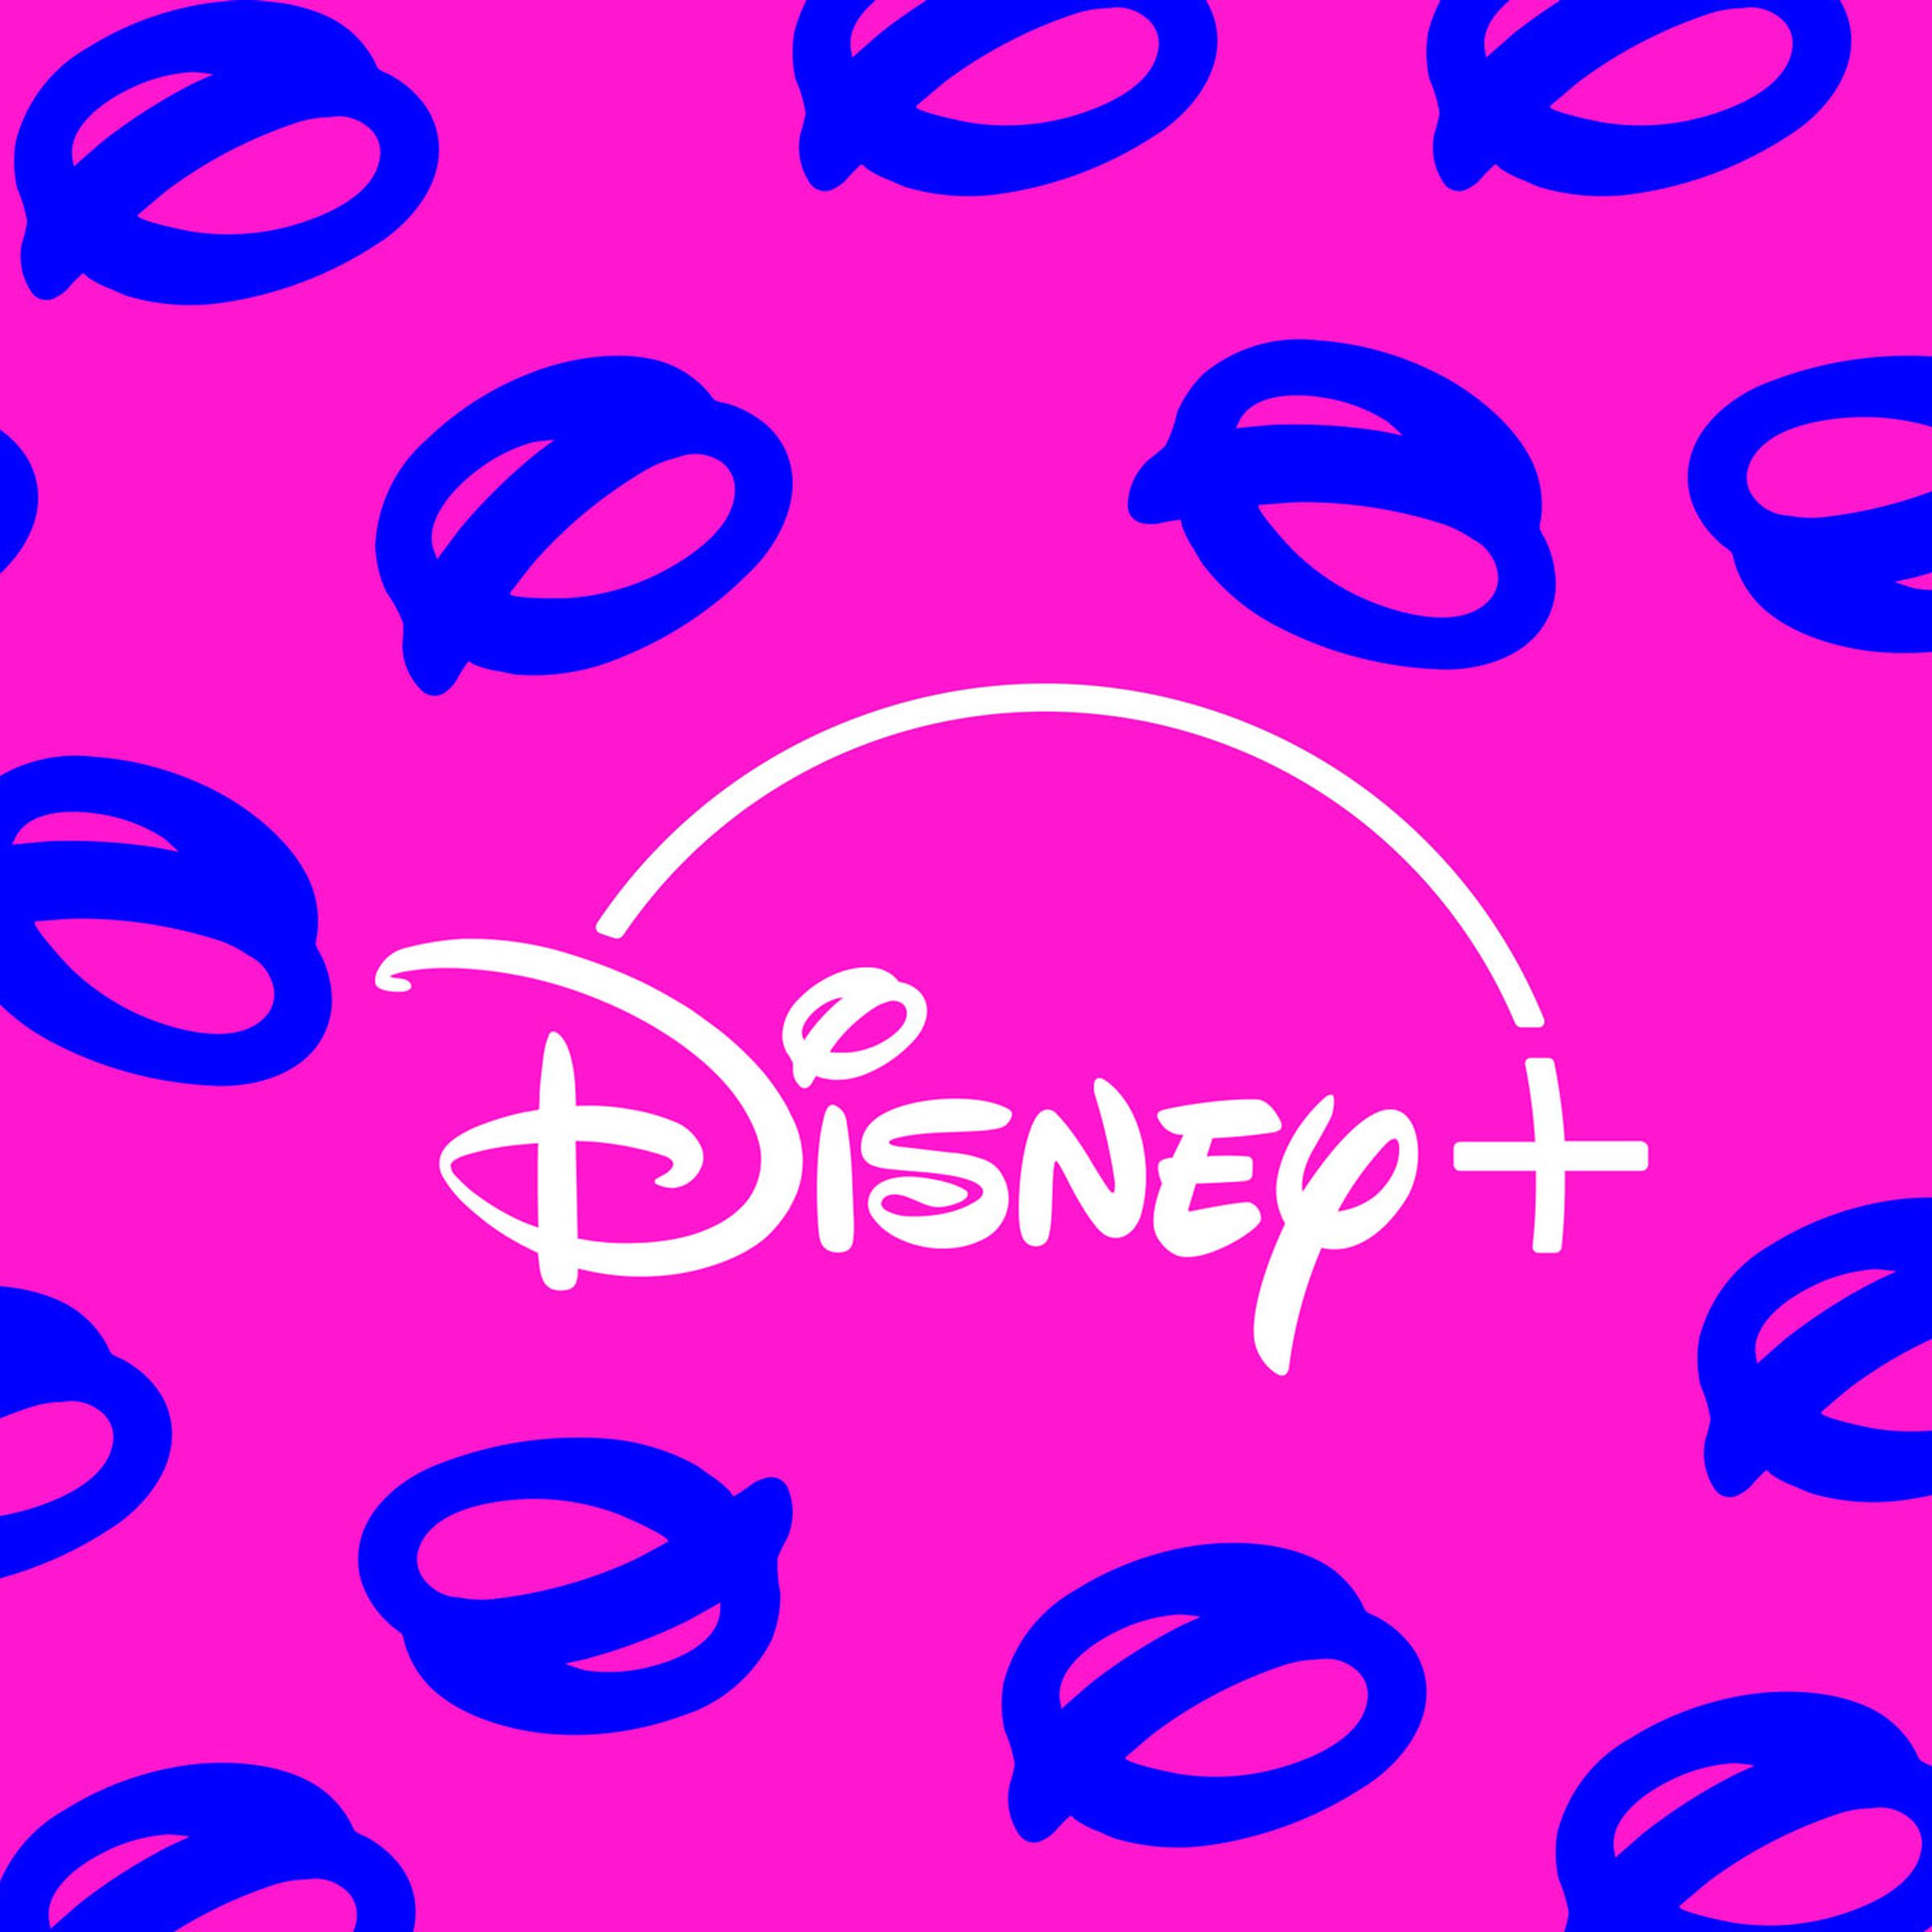 Disney’s logo